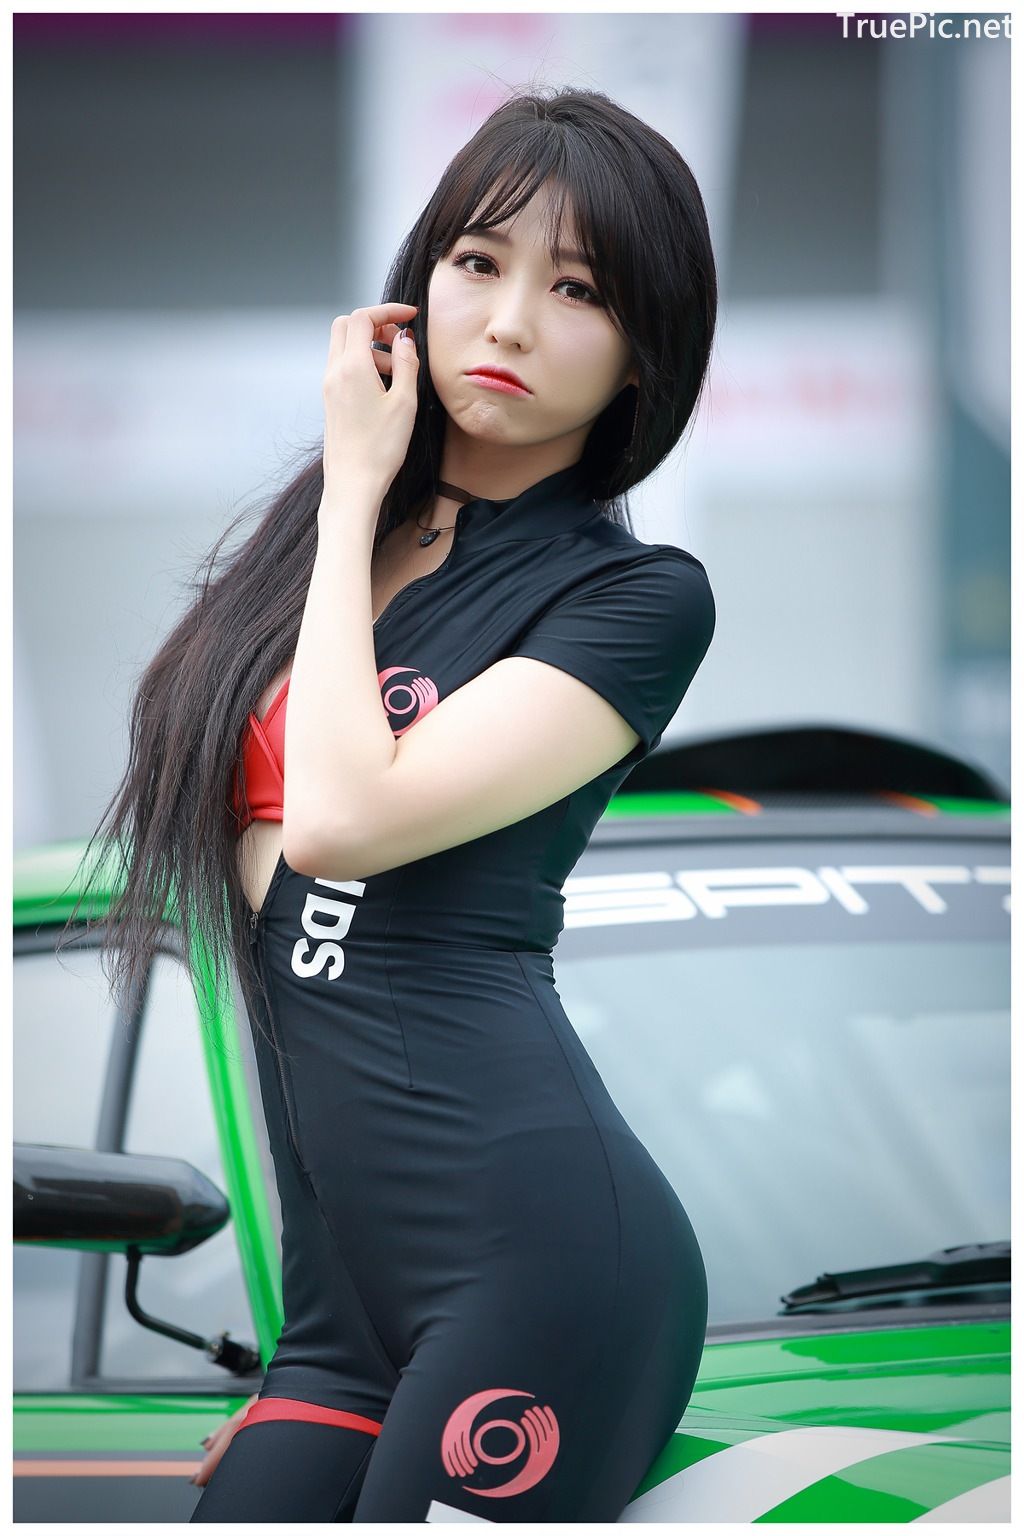 Image-Korean-Racing-Model-Lee-Eun-Hye-At-Incheon-Korea-Tuning-Festival-TruePic.net- Picture-228